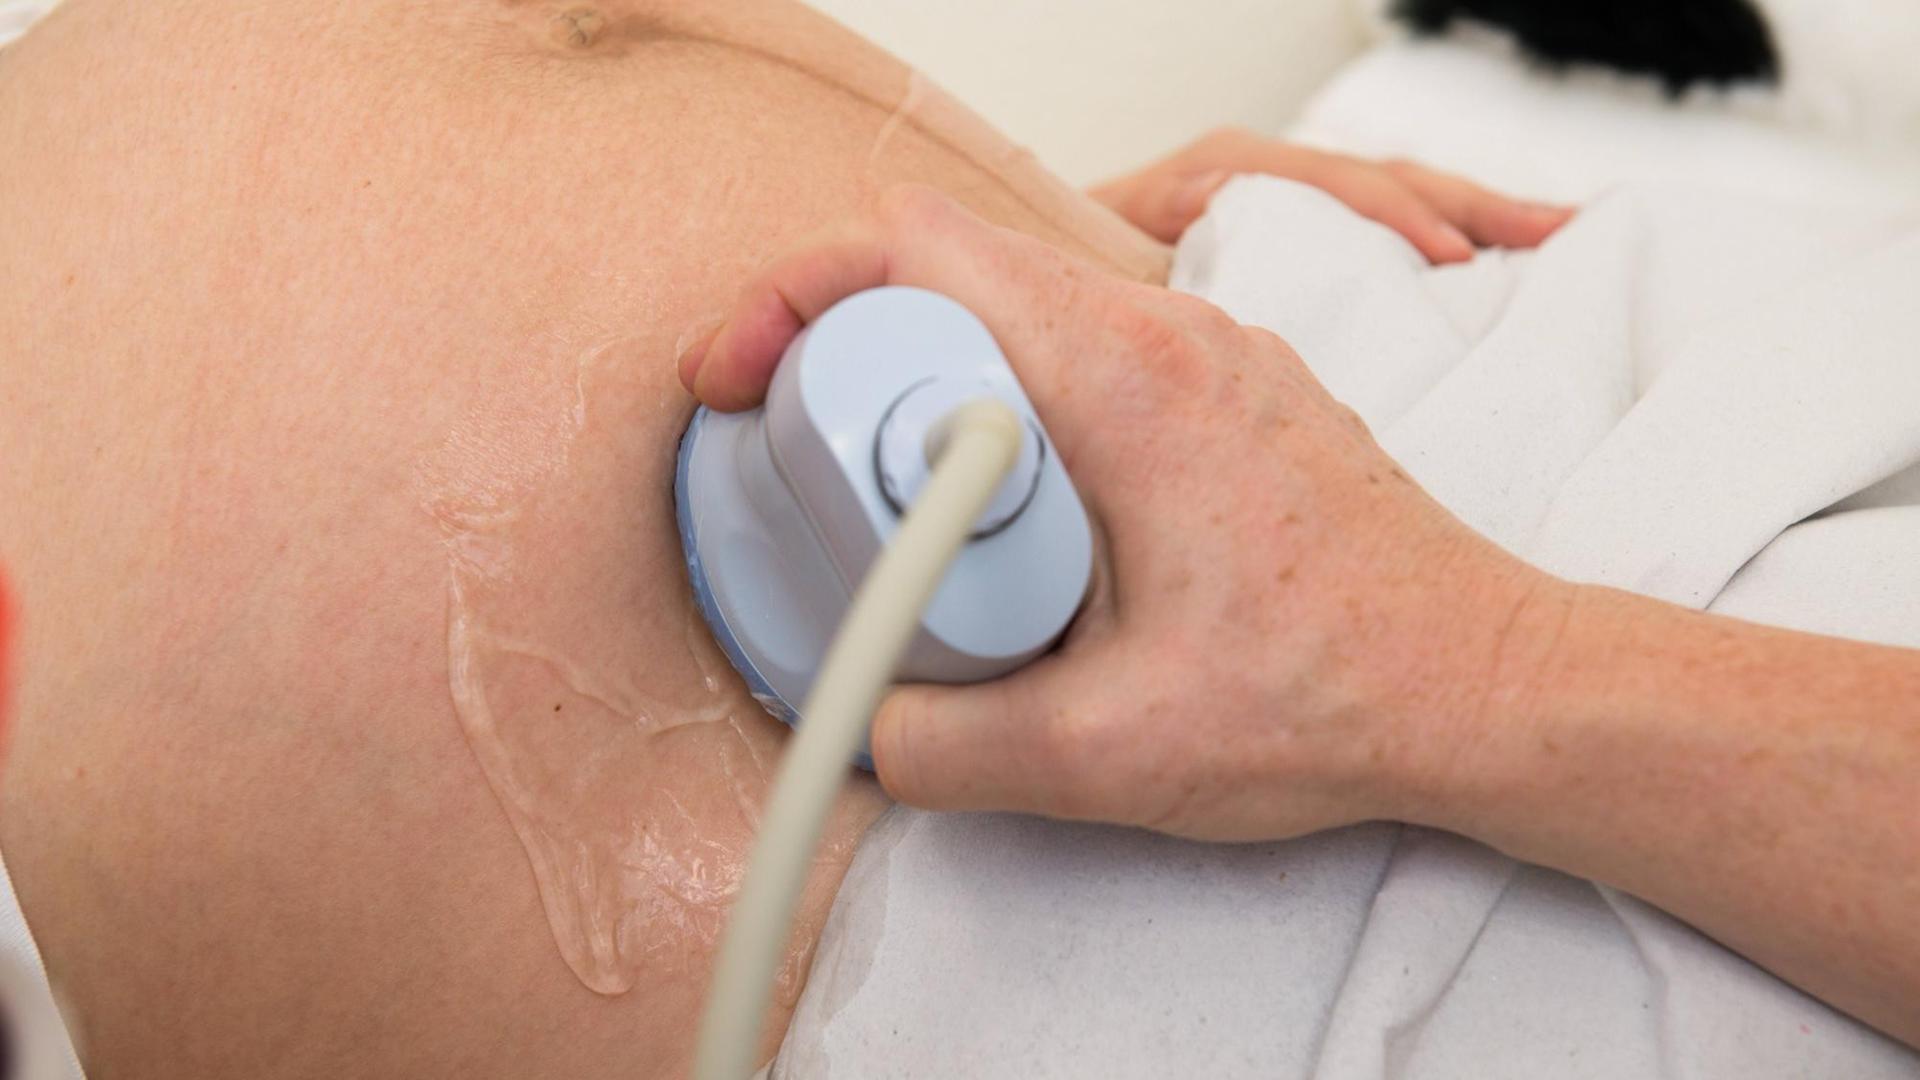 Ultraschall-Untersuchung einer Schwangeren Babyscreening *** Ultrasound examination of a pregnant woman Babyscreening